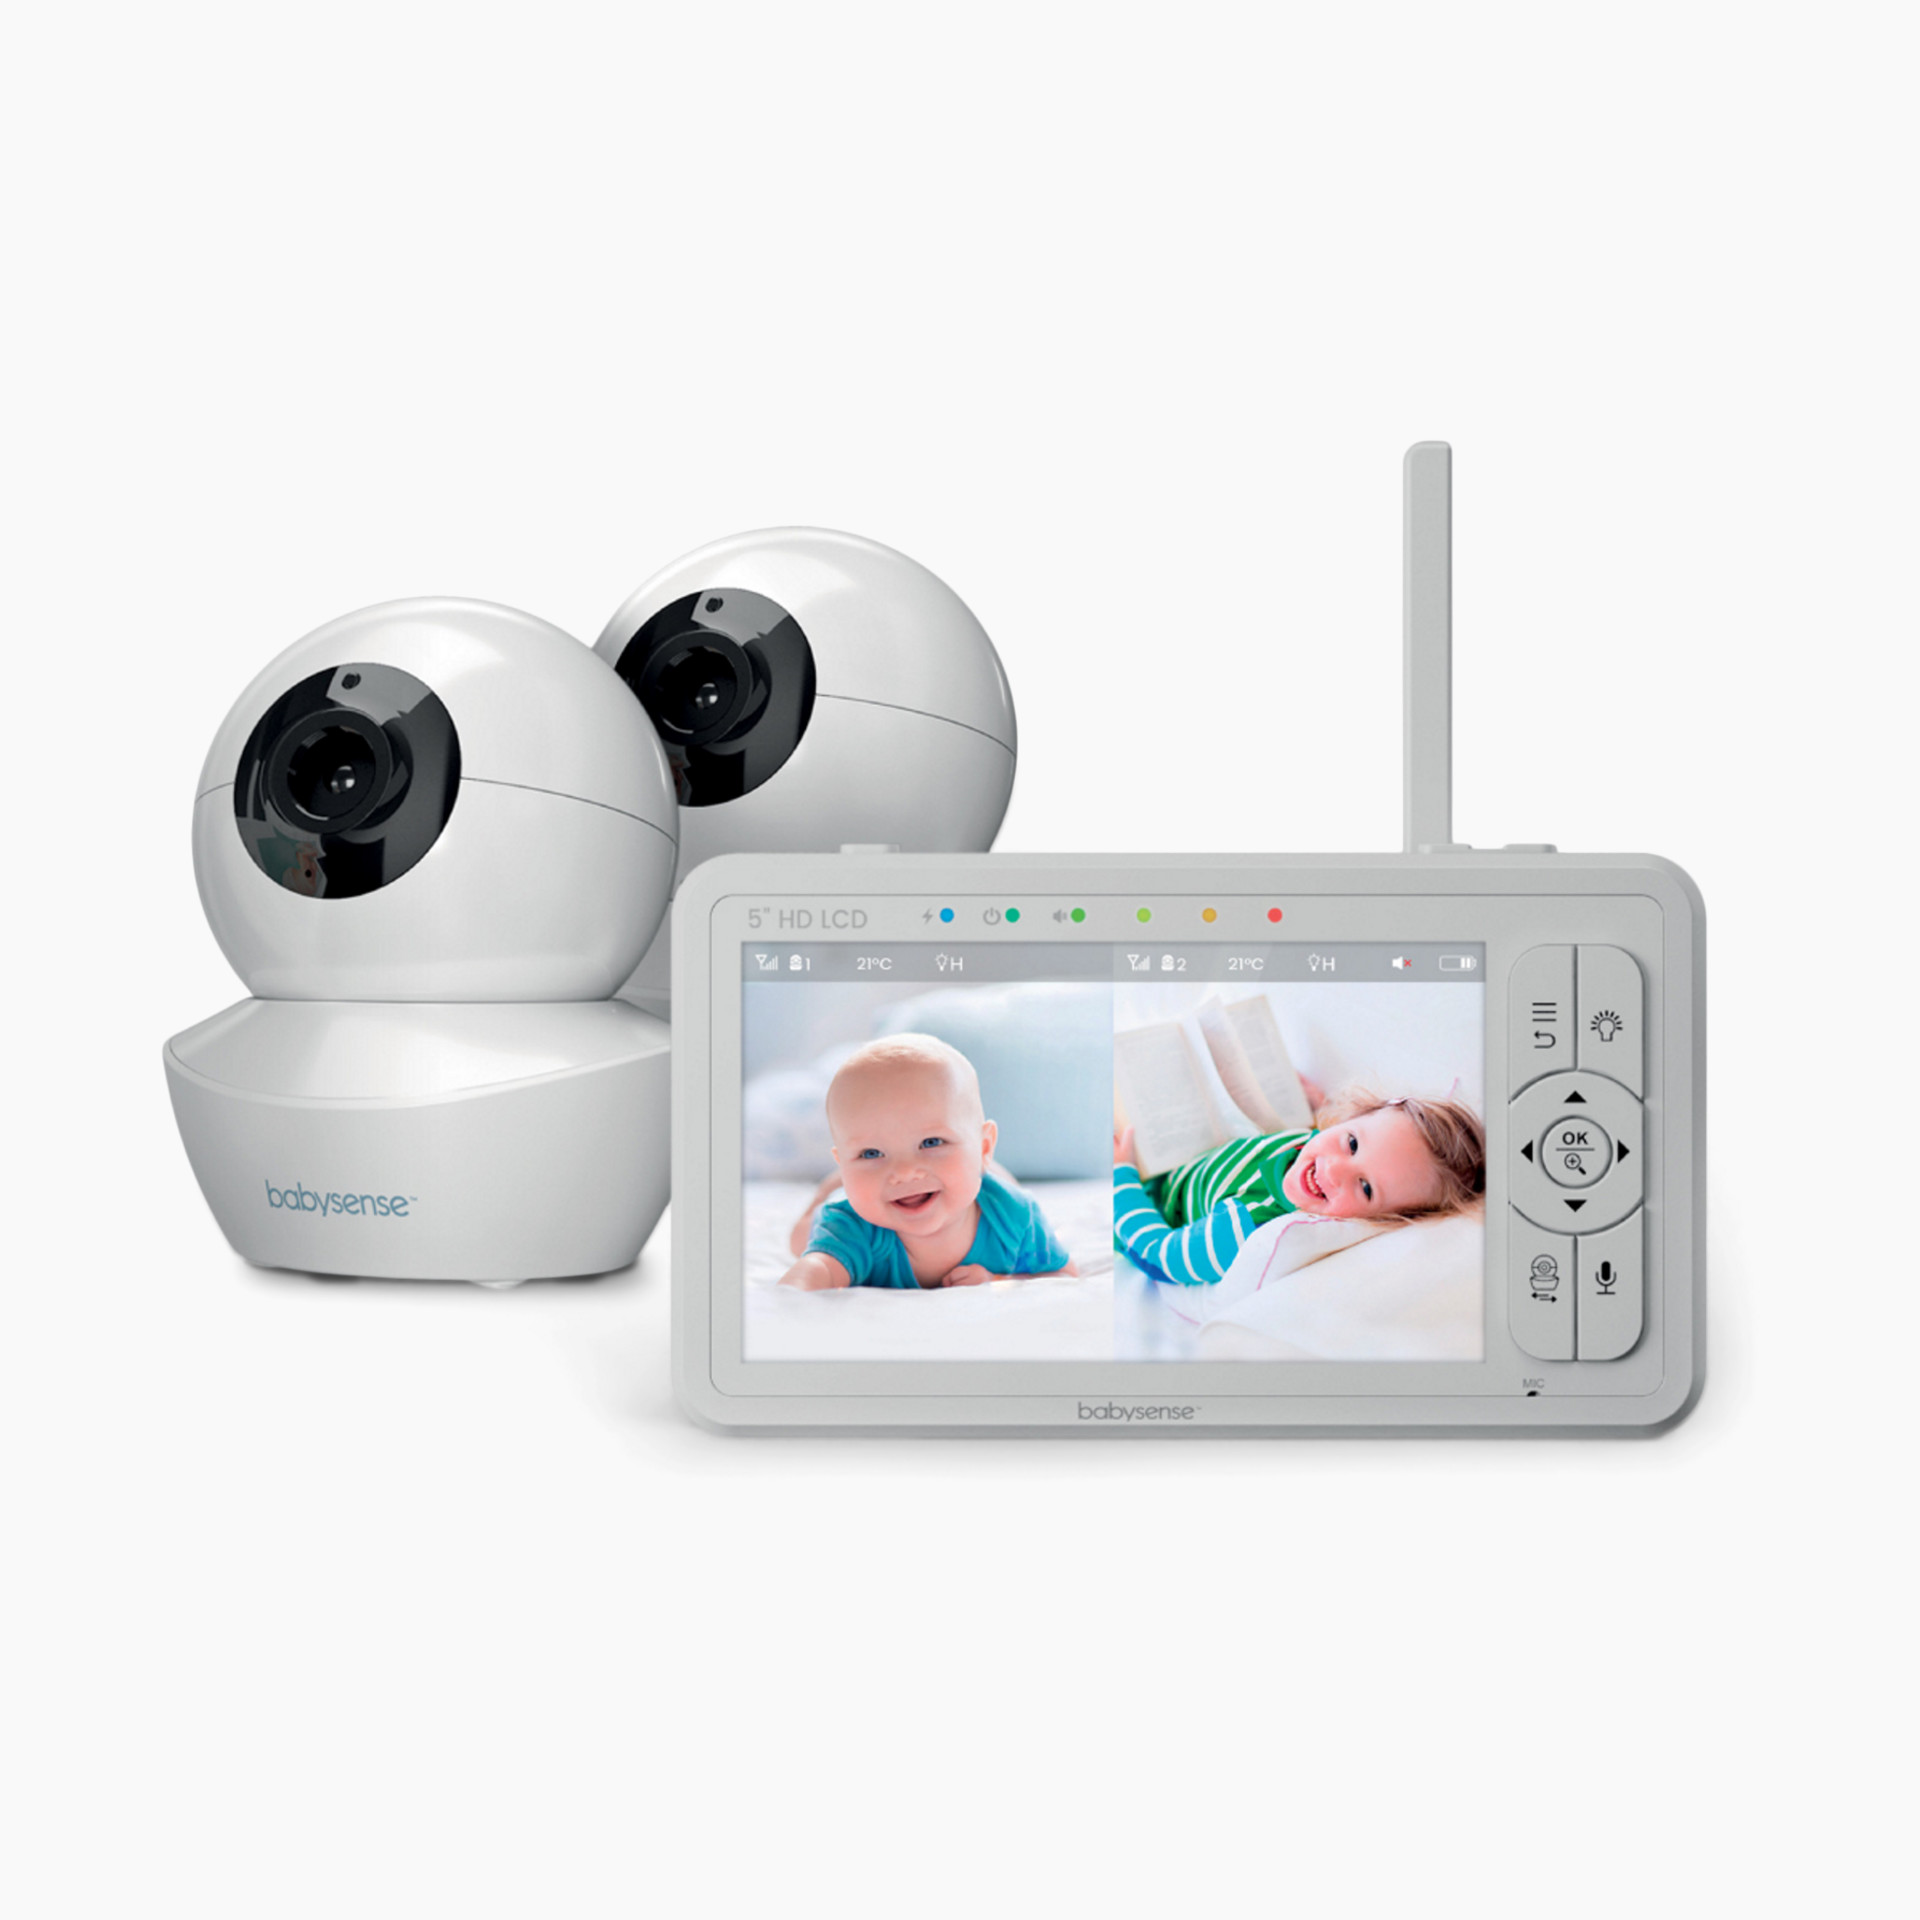 Babysense Digital Monitors for Kids